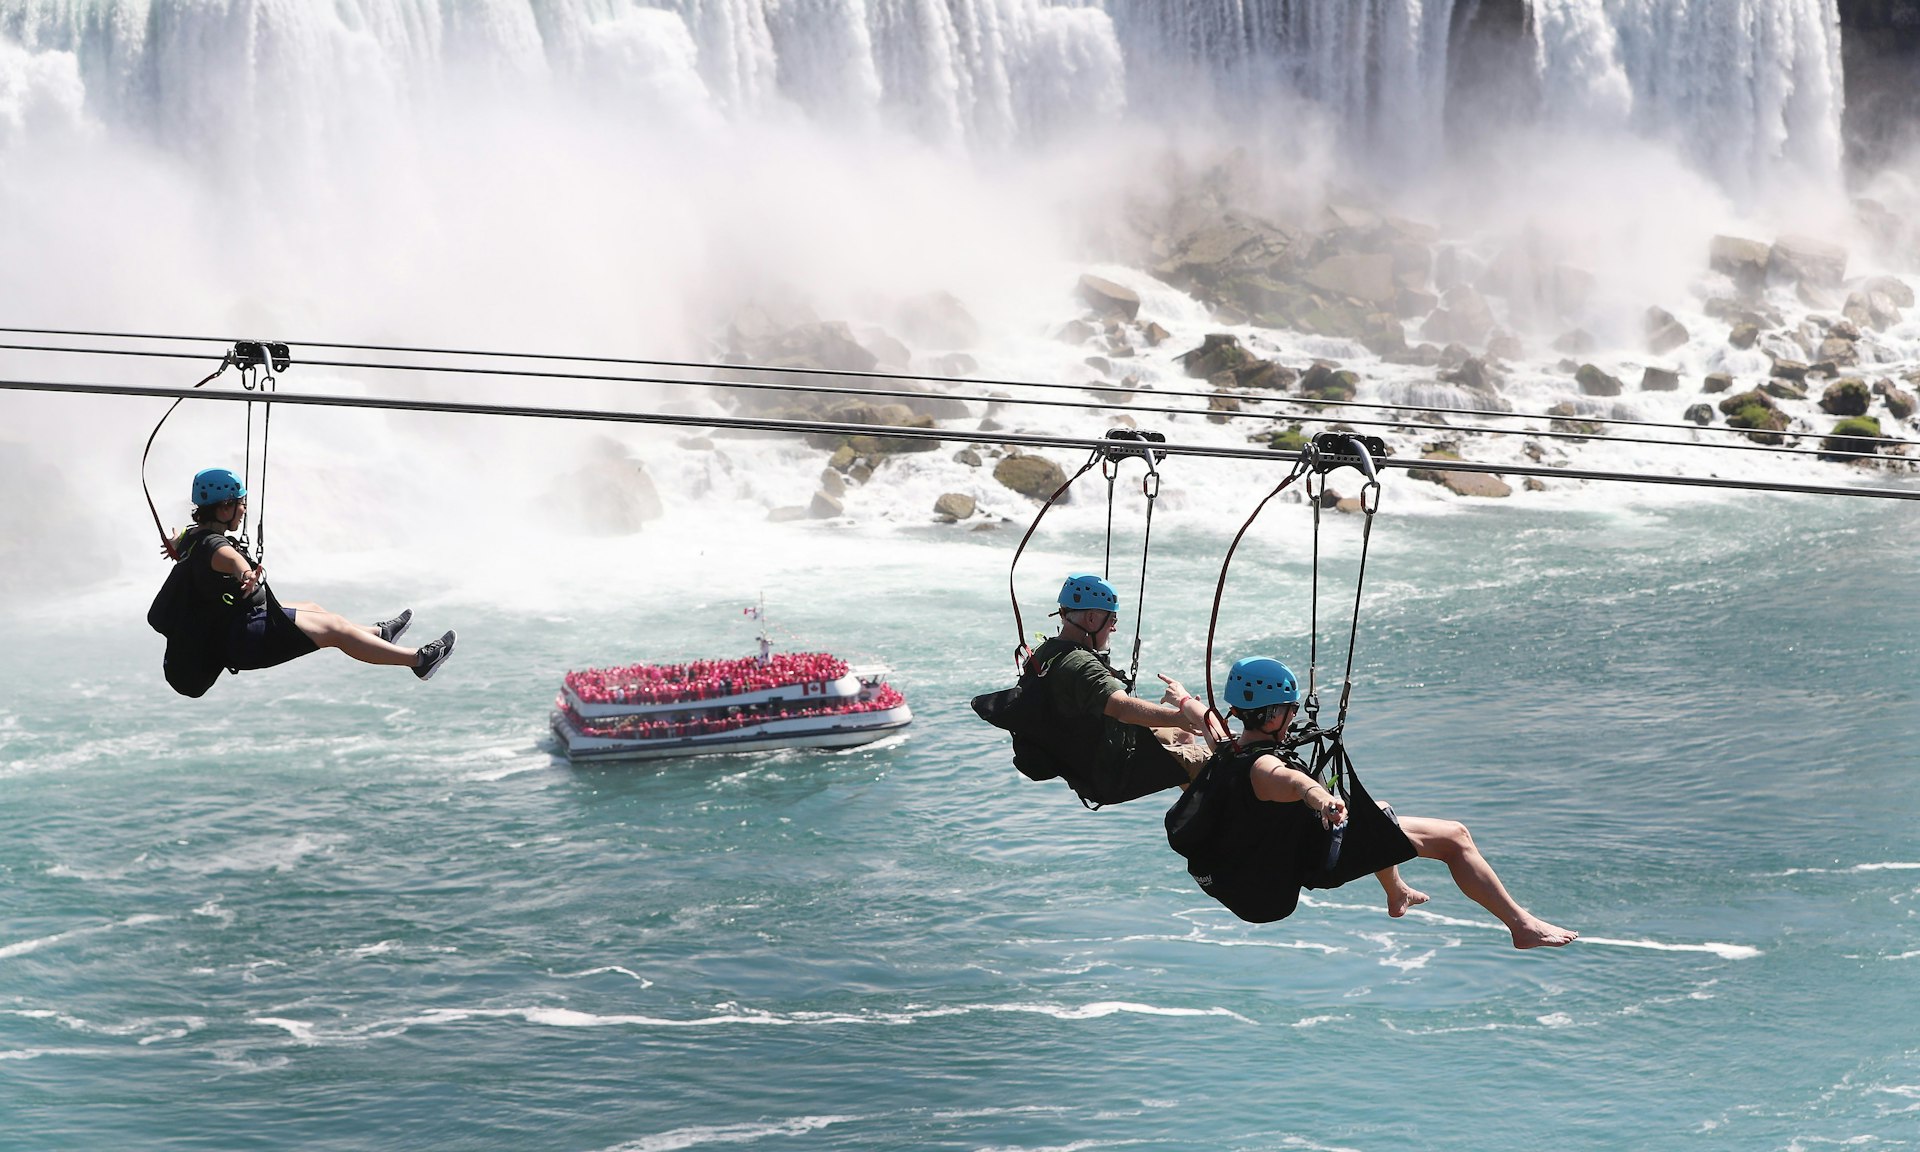 People clipped into a zip line pass over Niagara Falls, Ontario, Canada